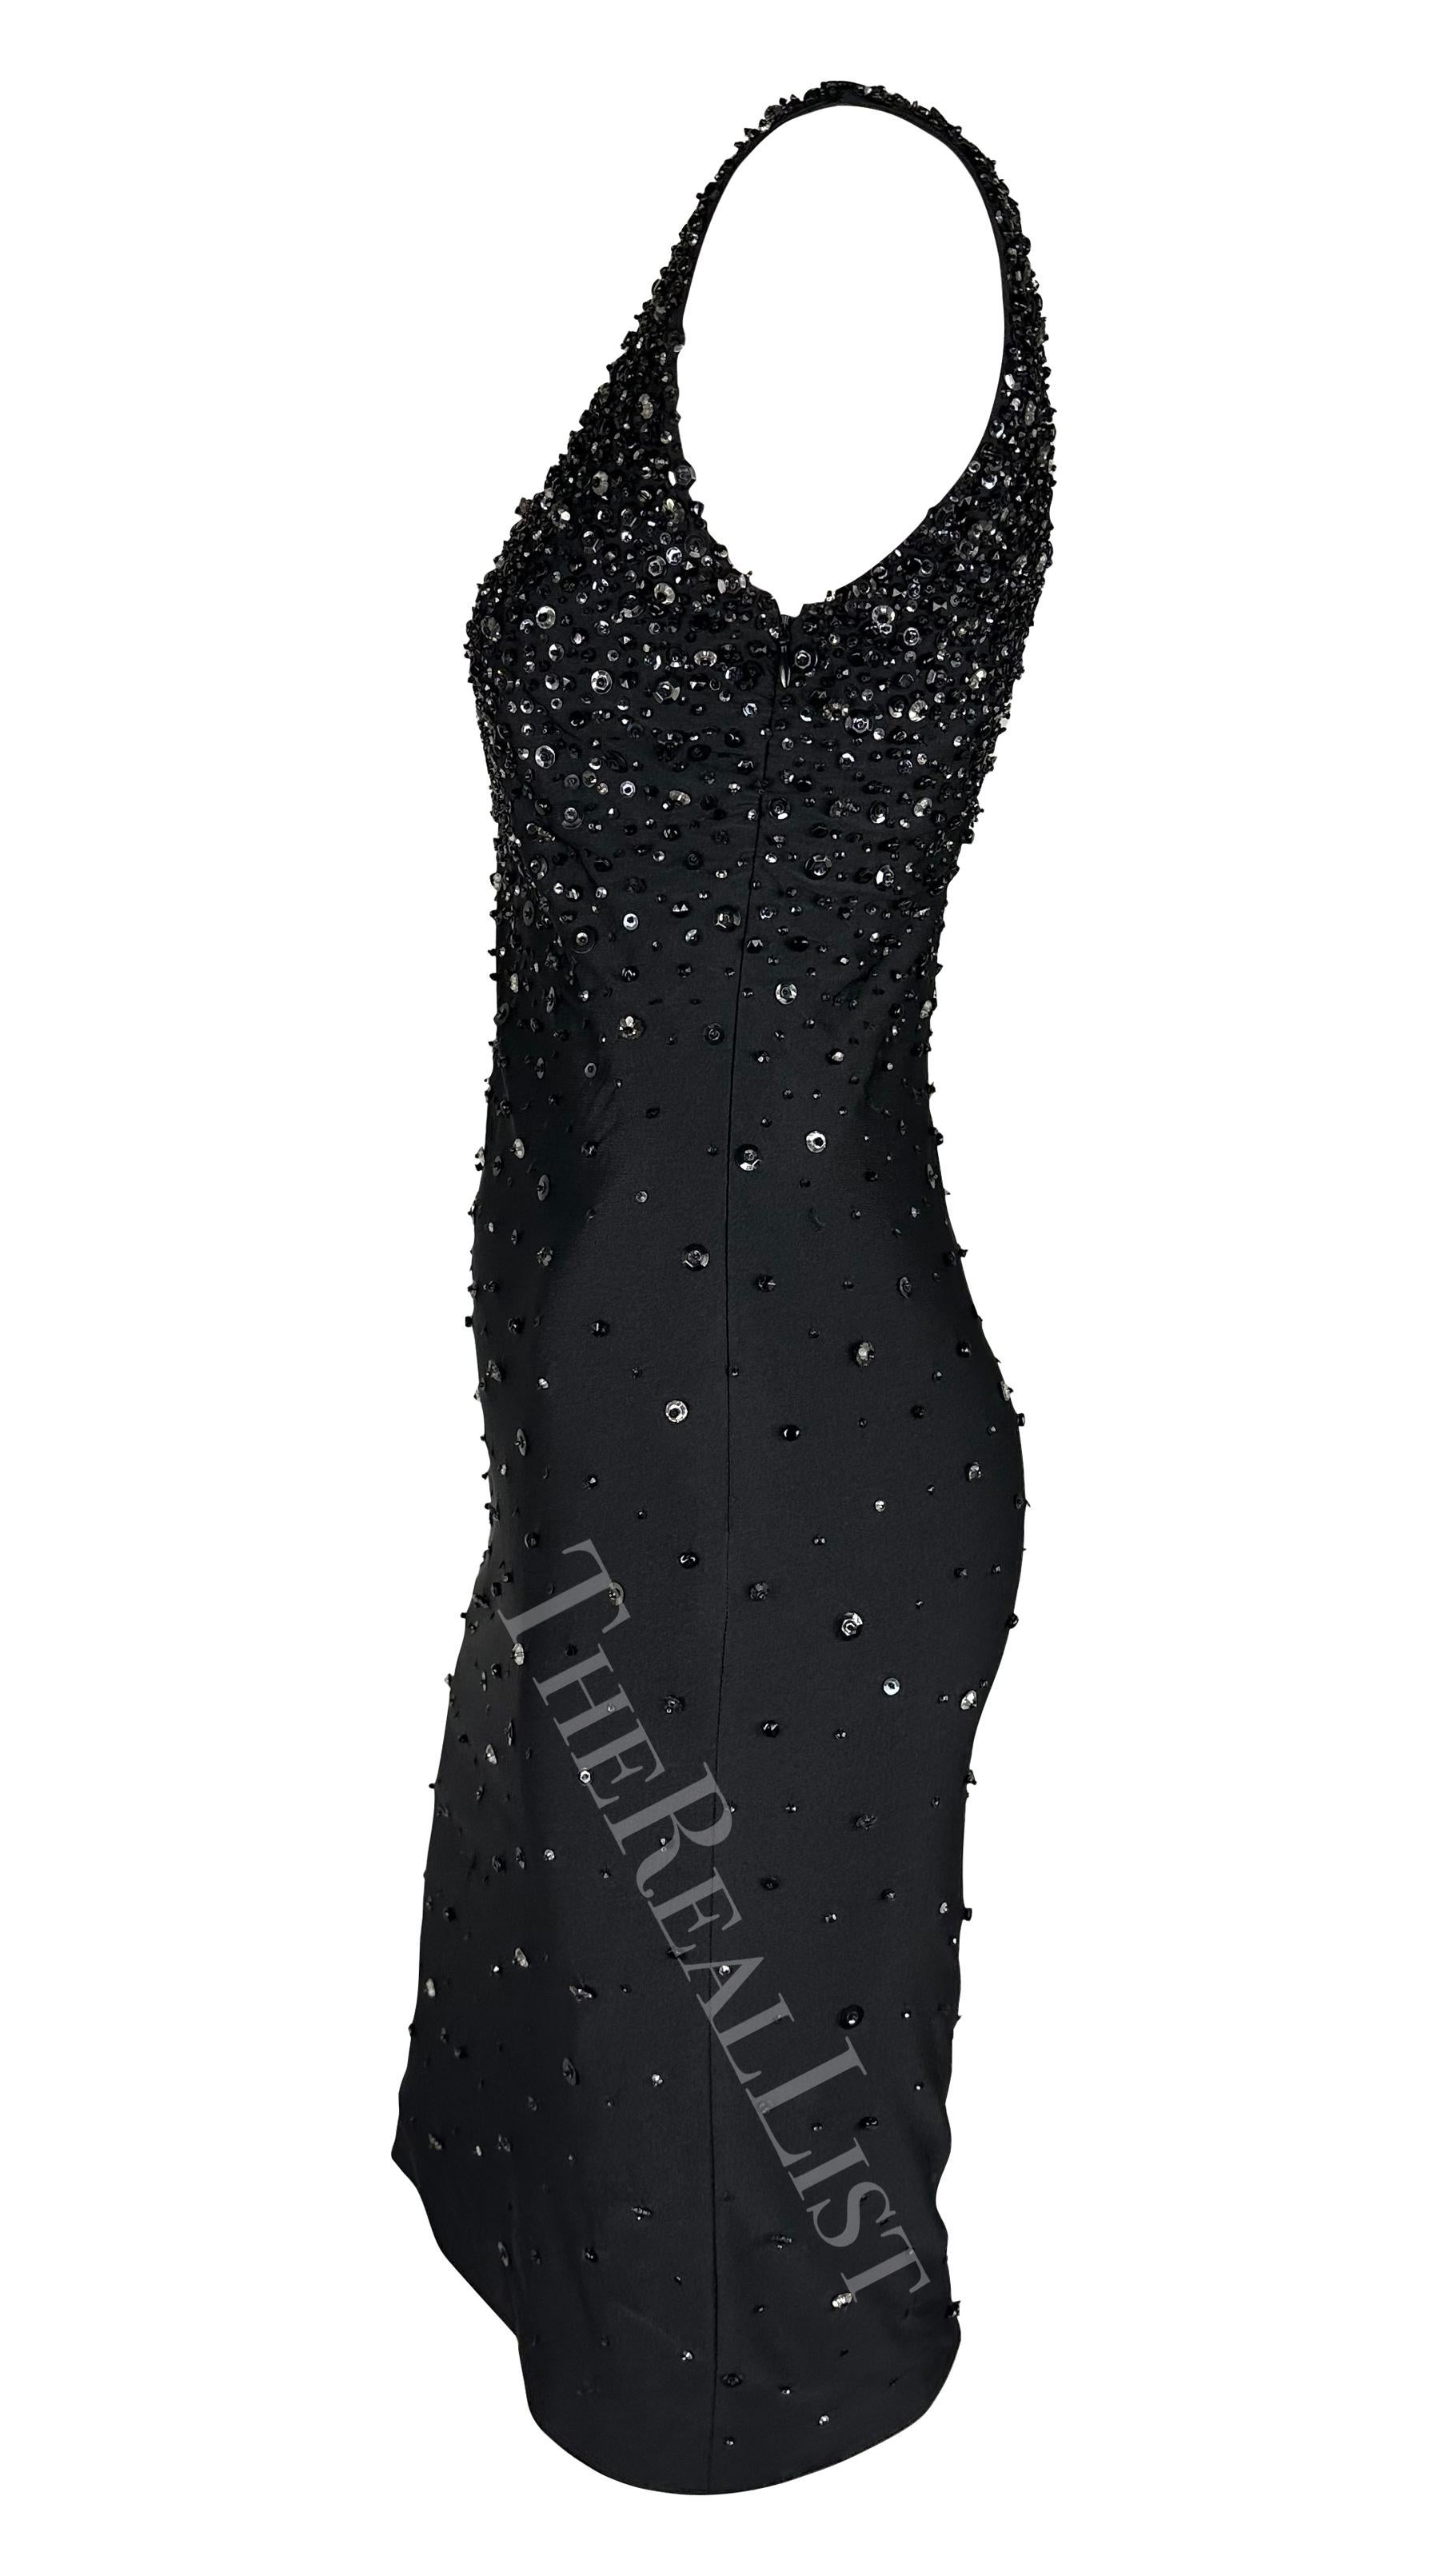 S/S 1996 Gianni Versace Black Beaded Sleeveless Bodycon Runway Dress For Sale 3